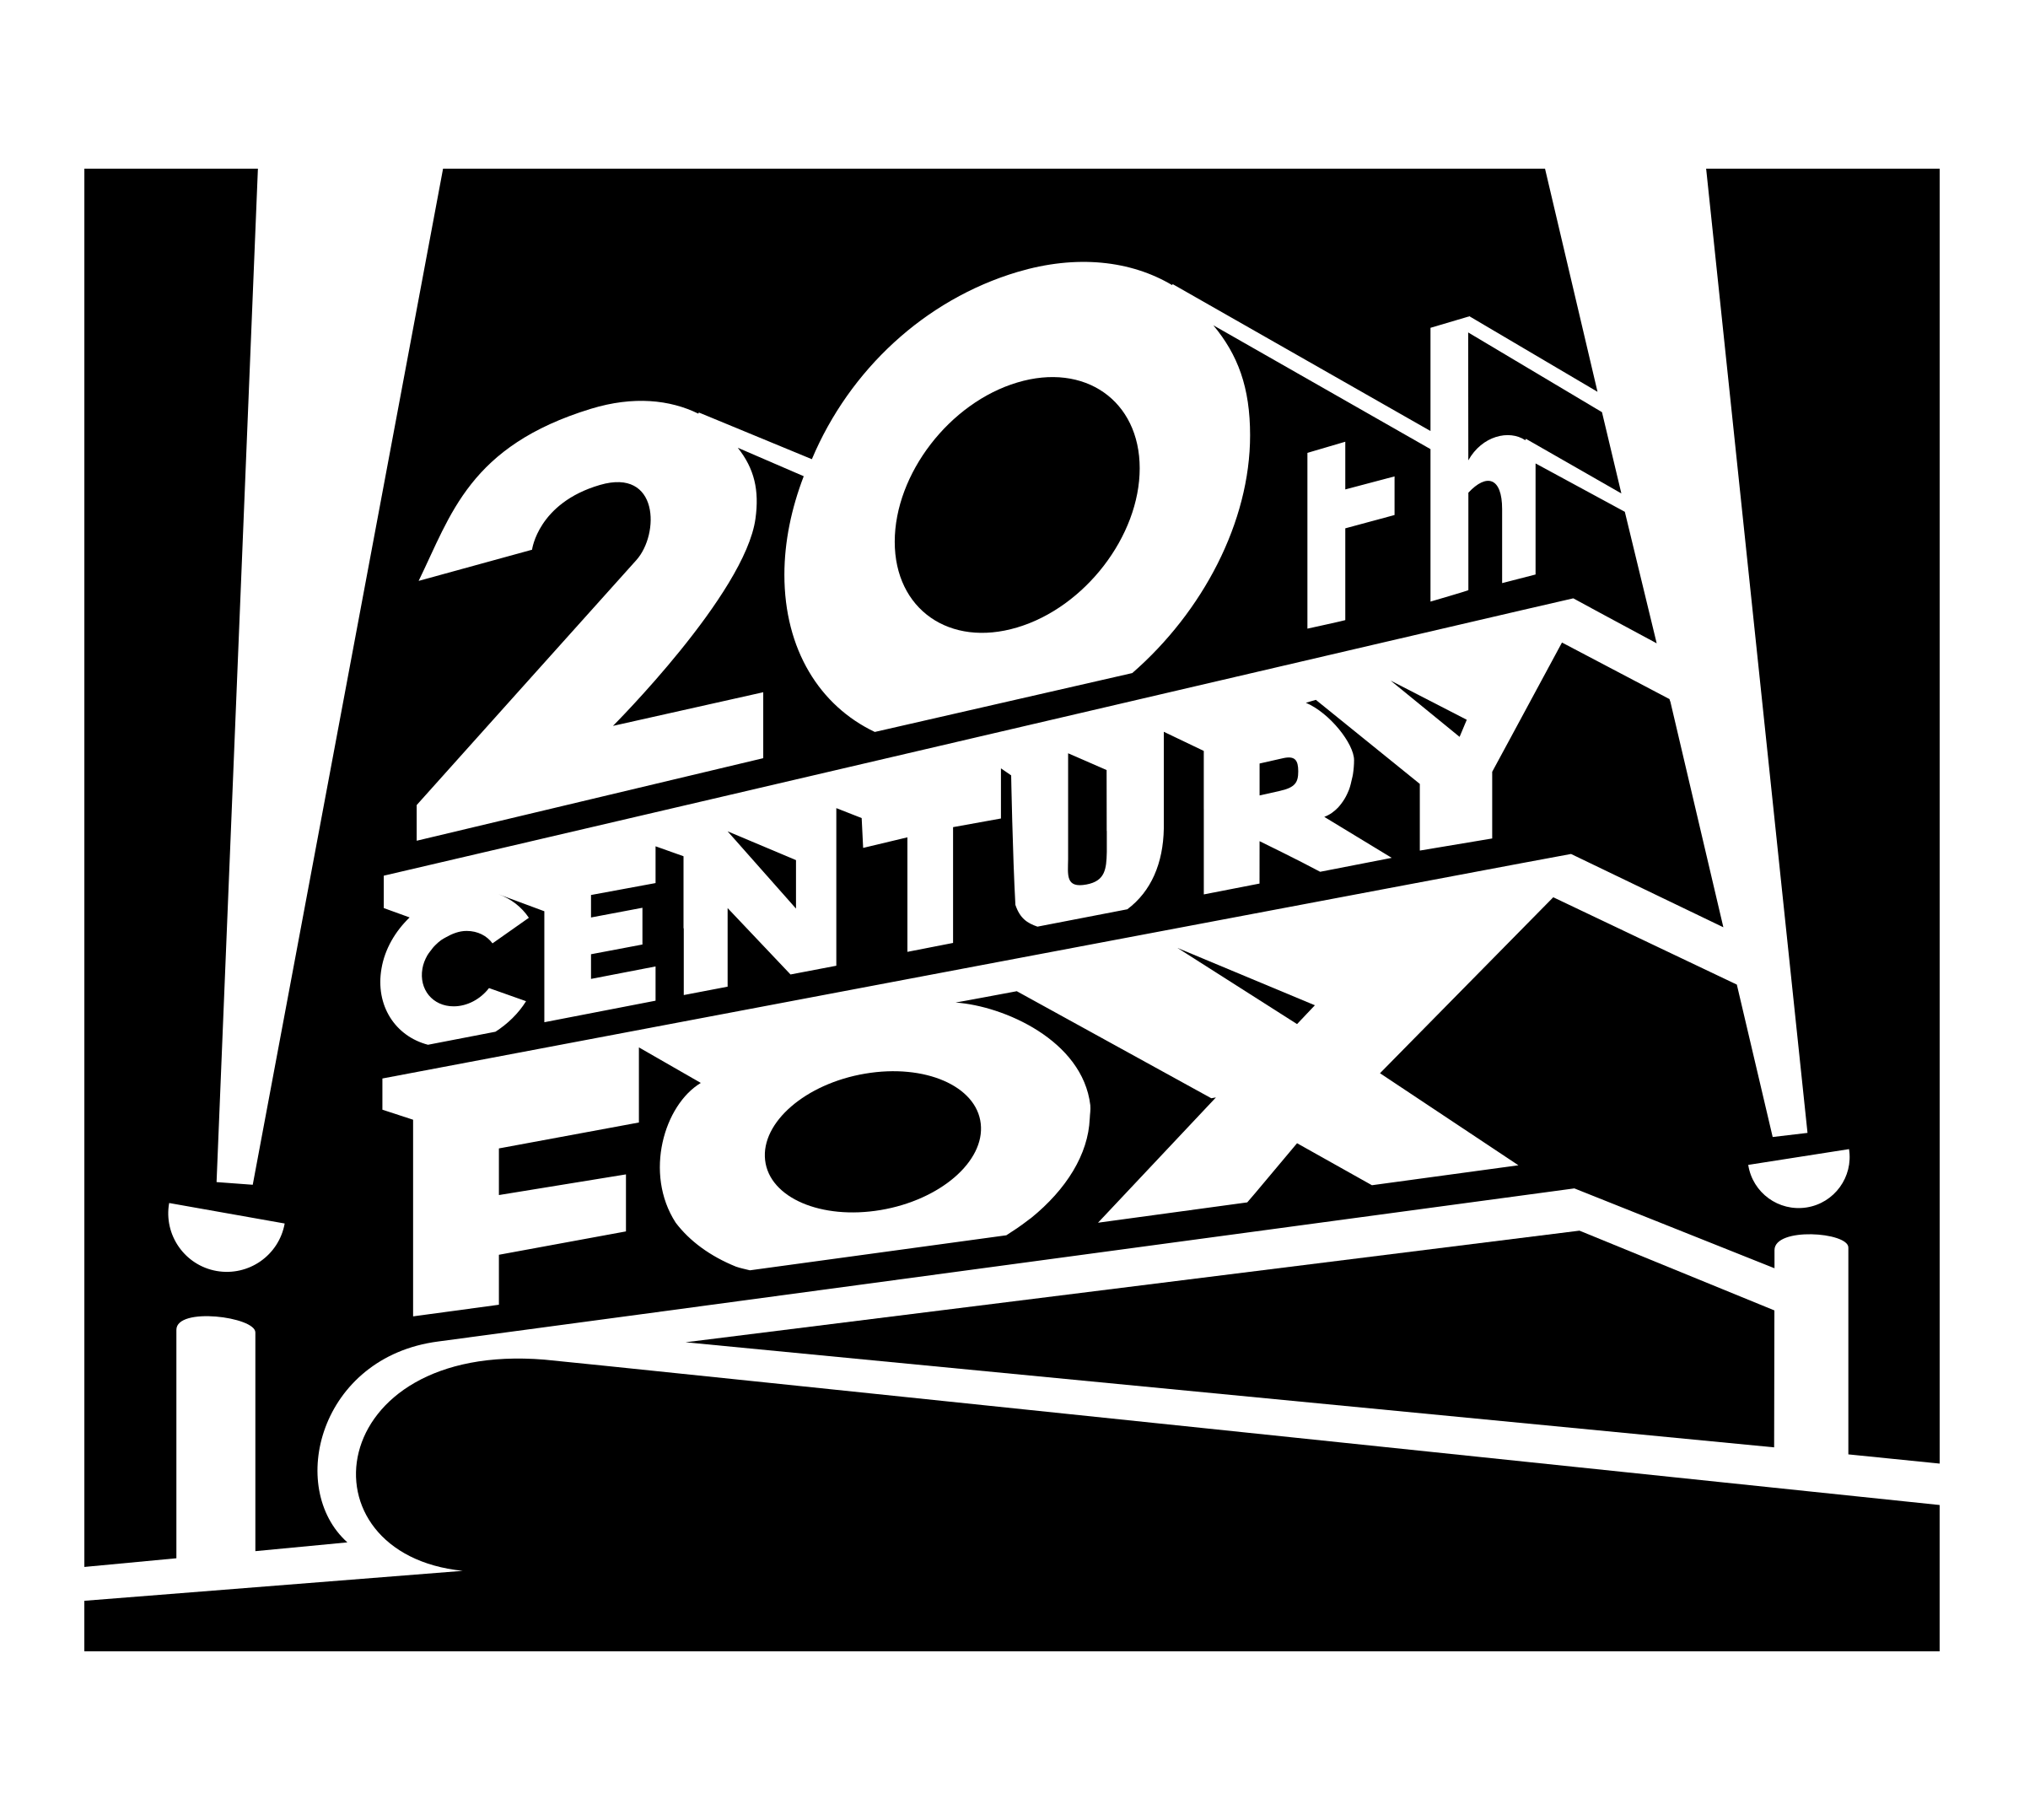 20th Century Fox Logo Wiki